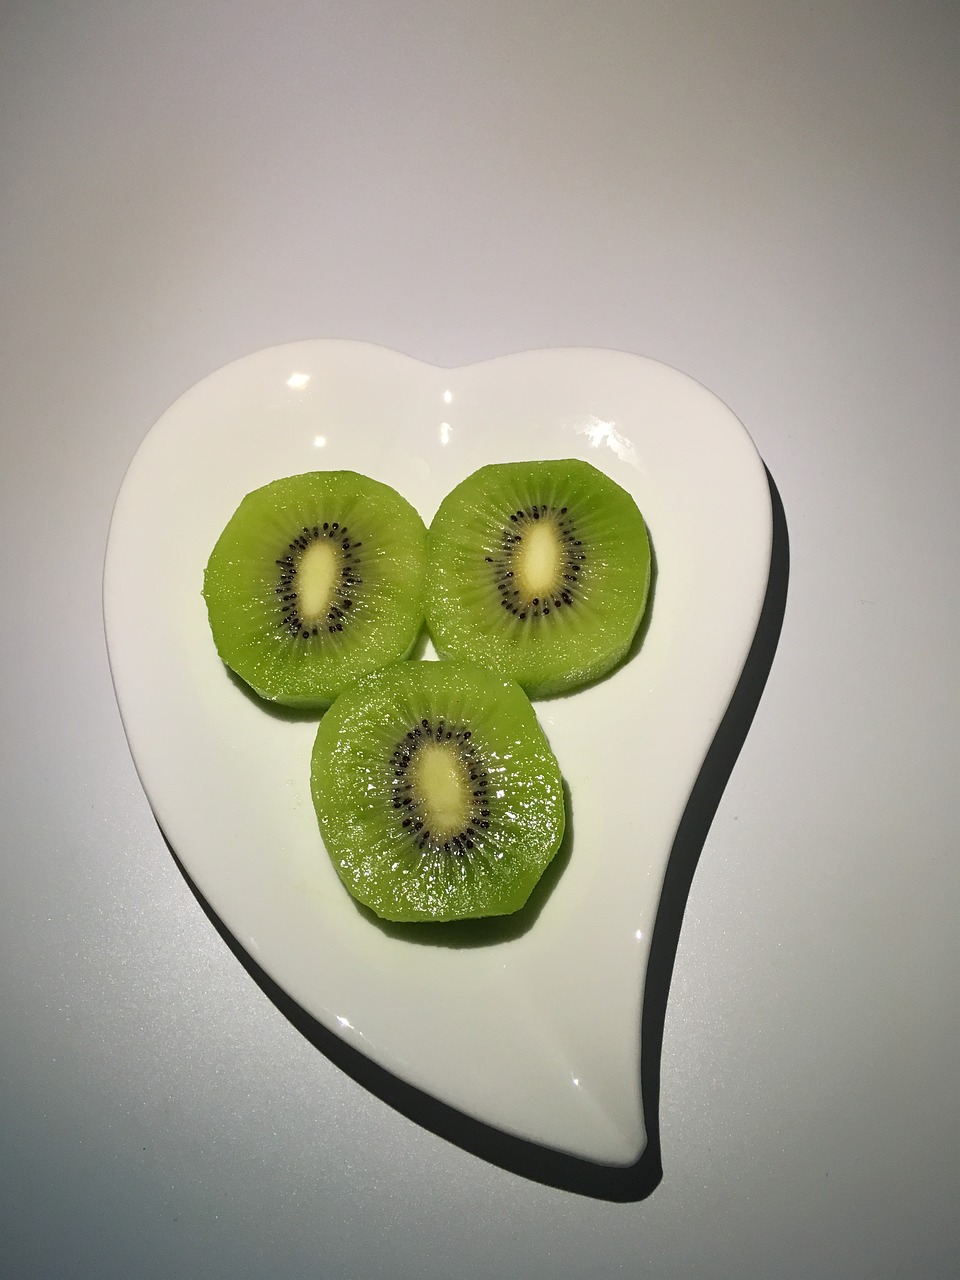 kiwi kiwi slices heart-shaped plate free photo